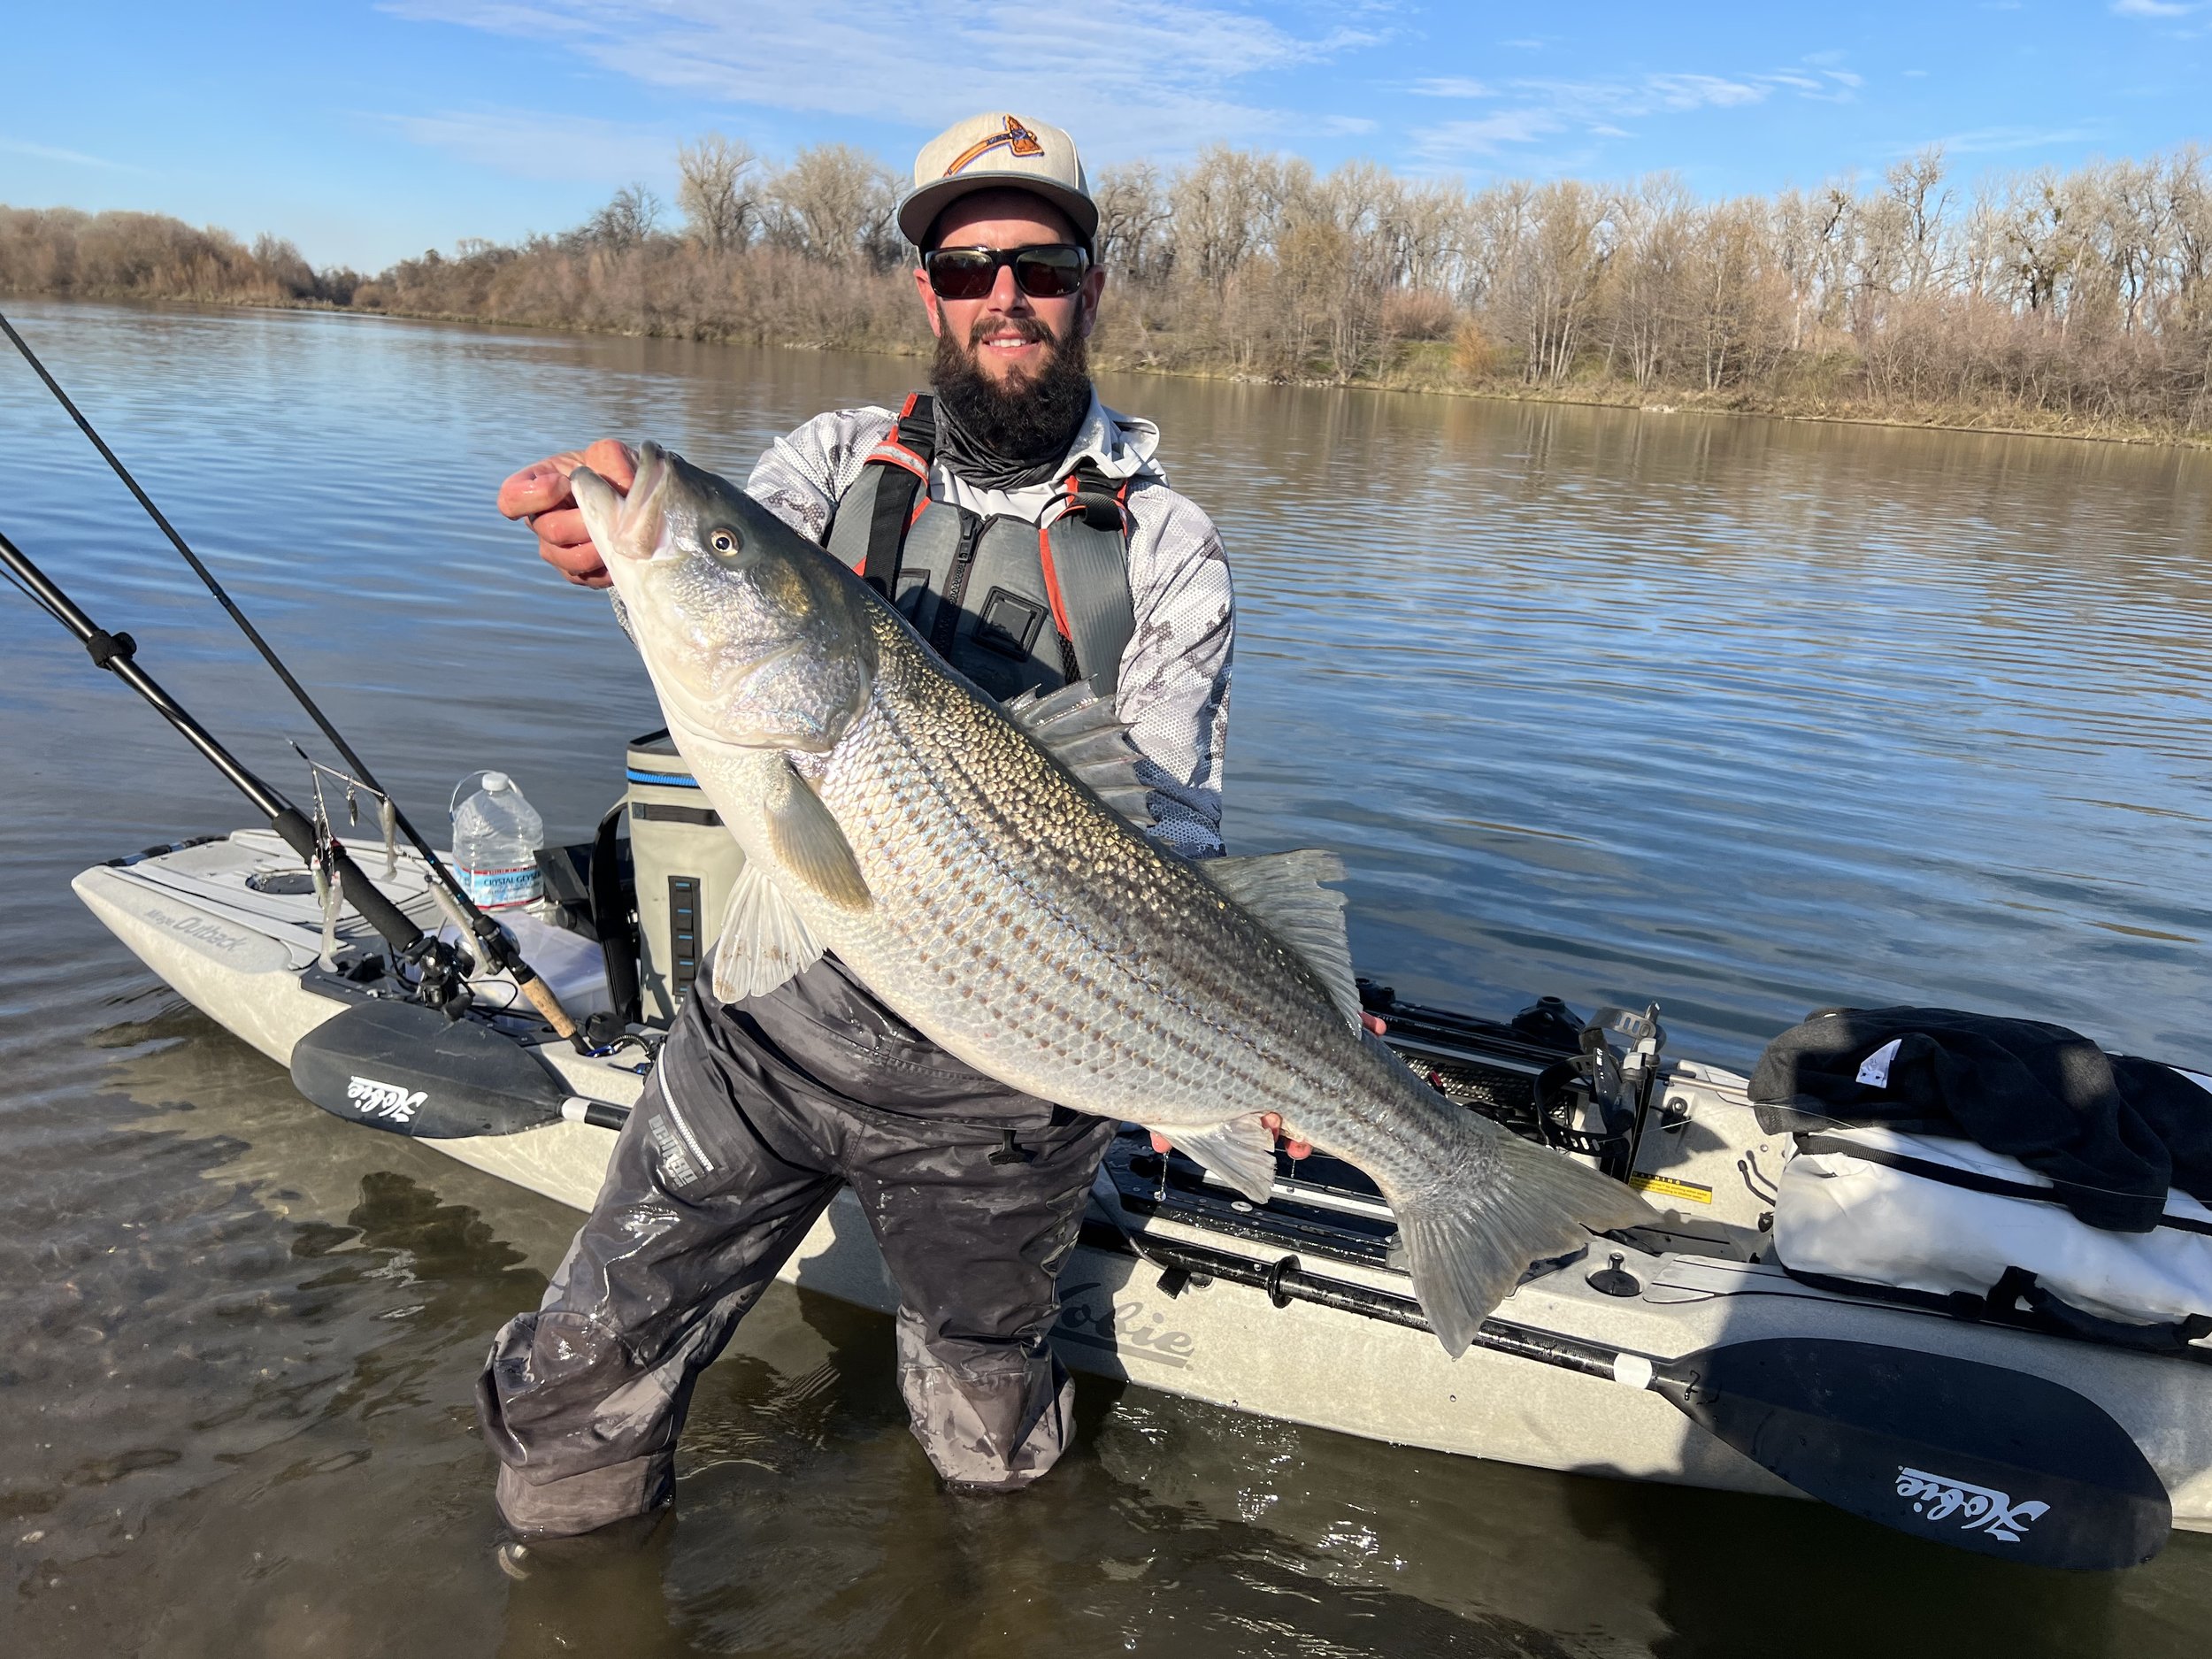 Sacramento River Trophy Striped Bass Fishing Report 2/3/22 - “Ding